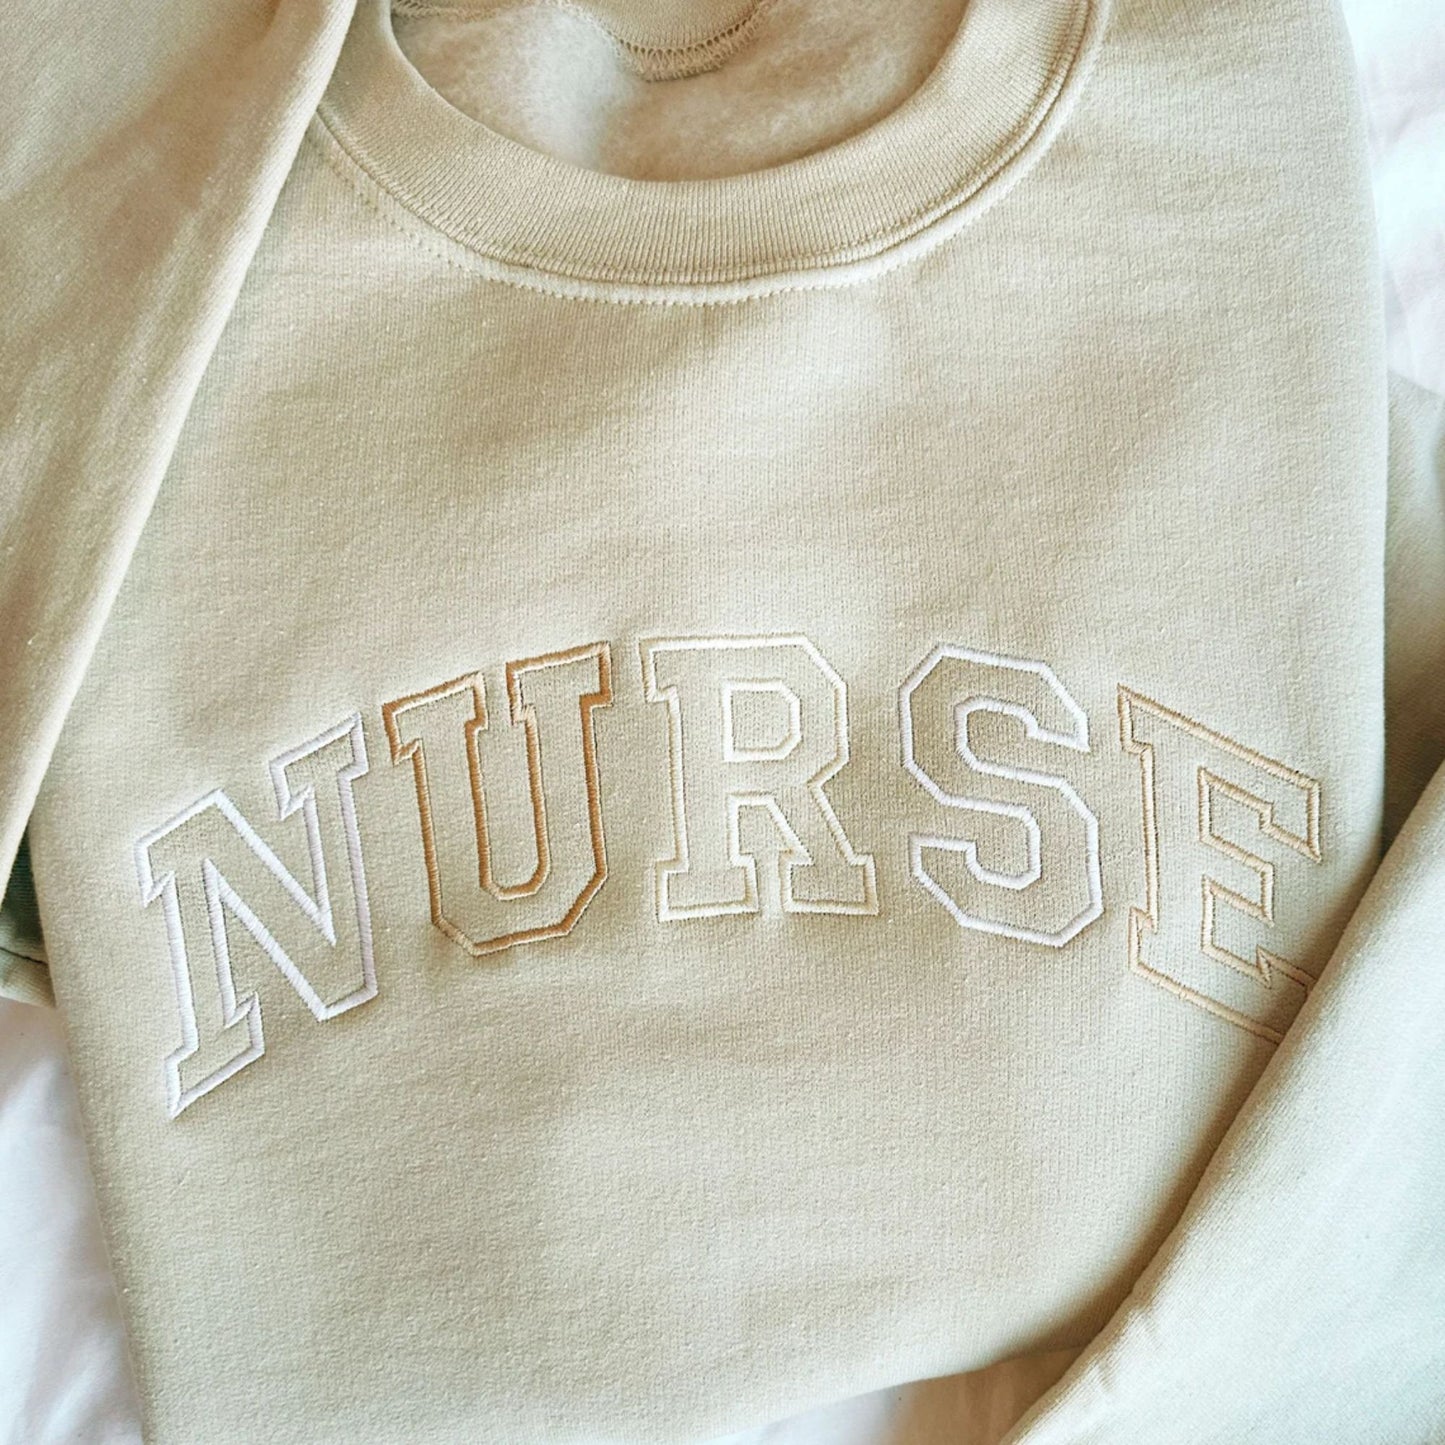 Embroidered NURSE Sweatshirt, Gift for Nurse